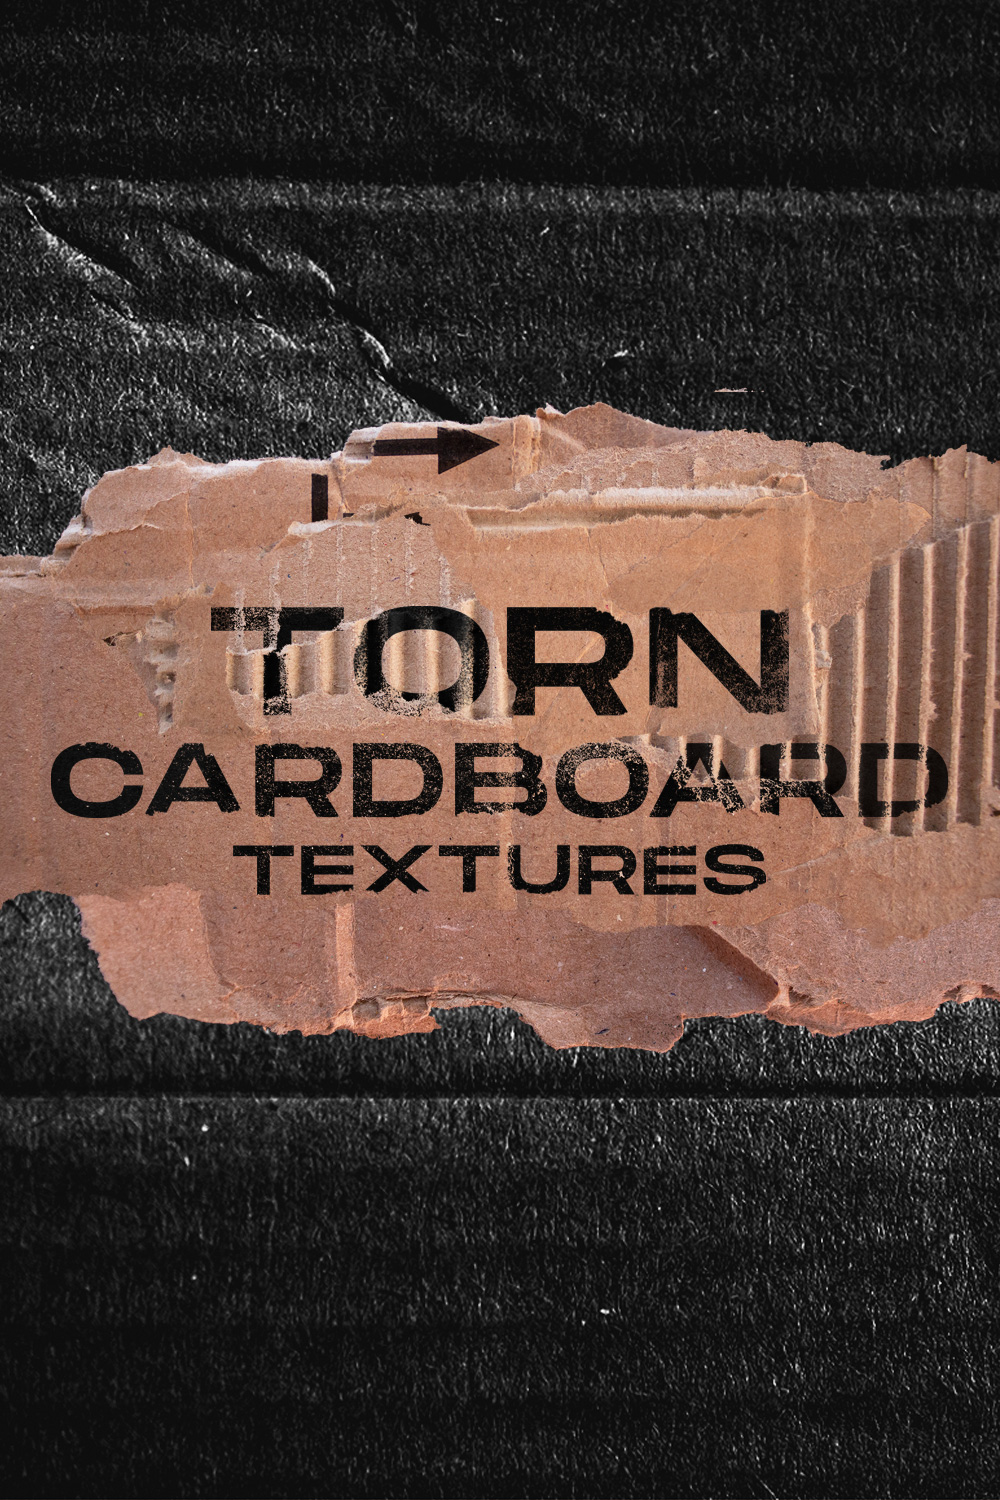 Torn Cardboard Textures Pinterest image.